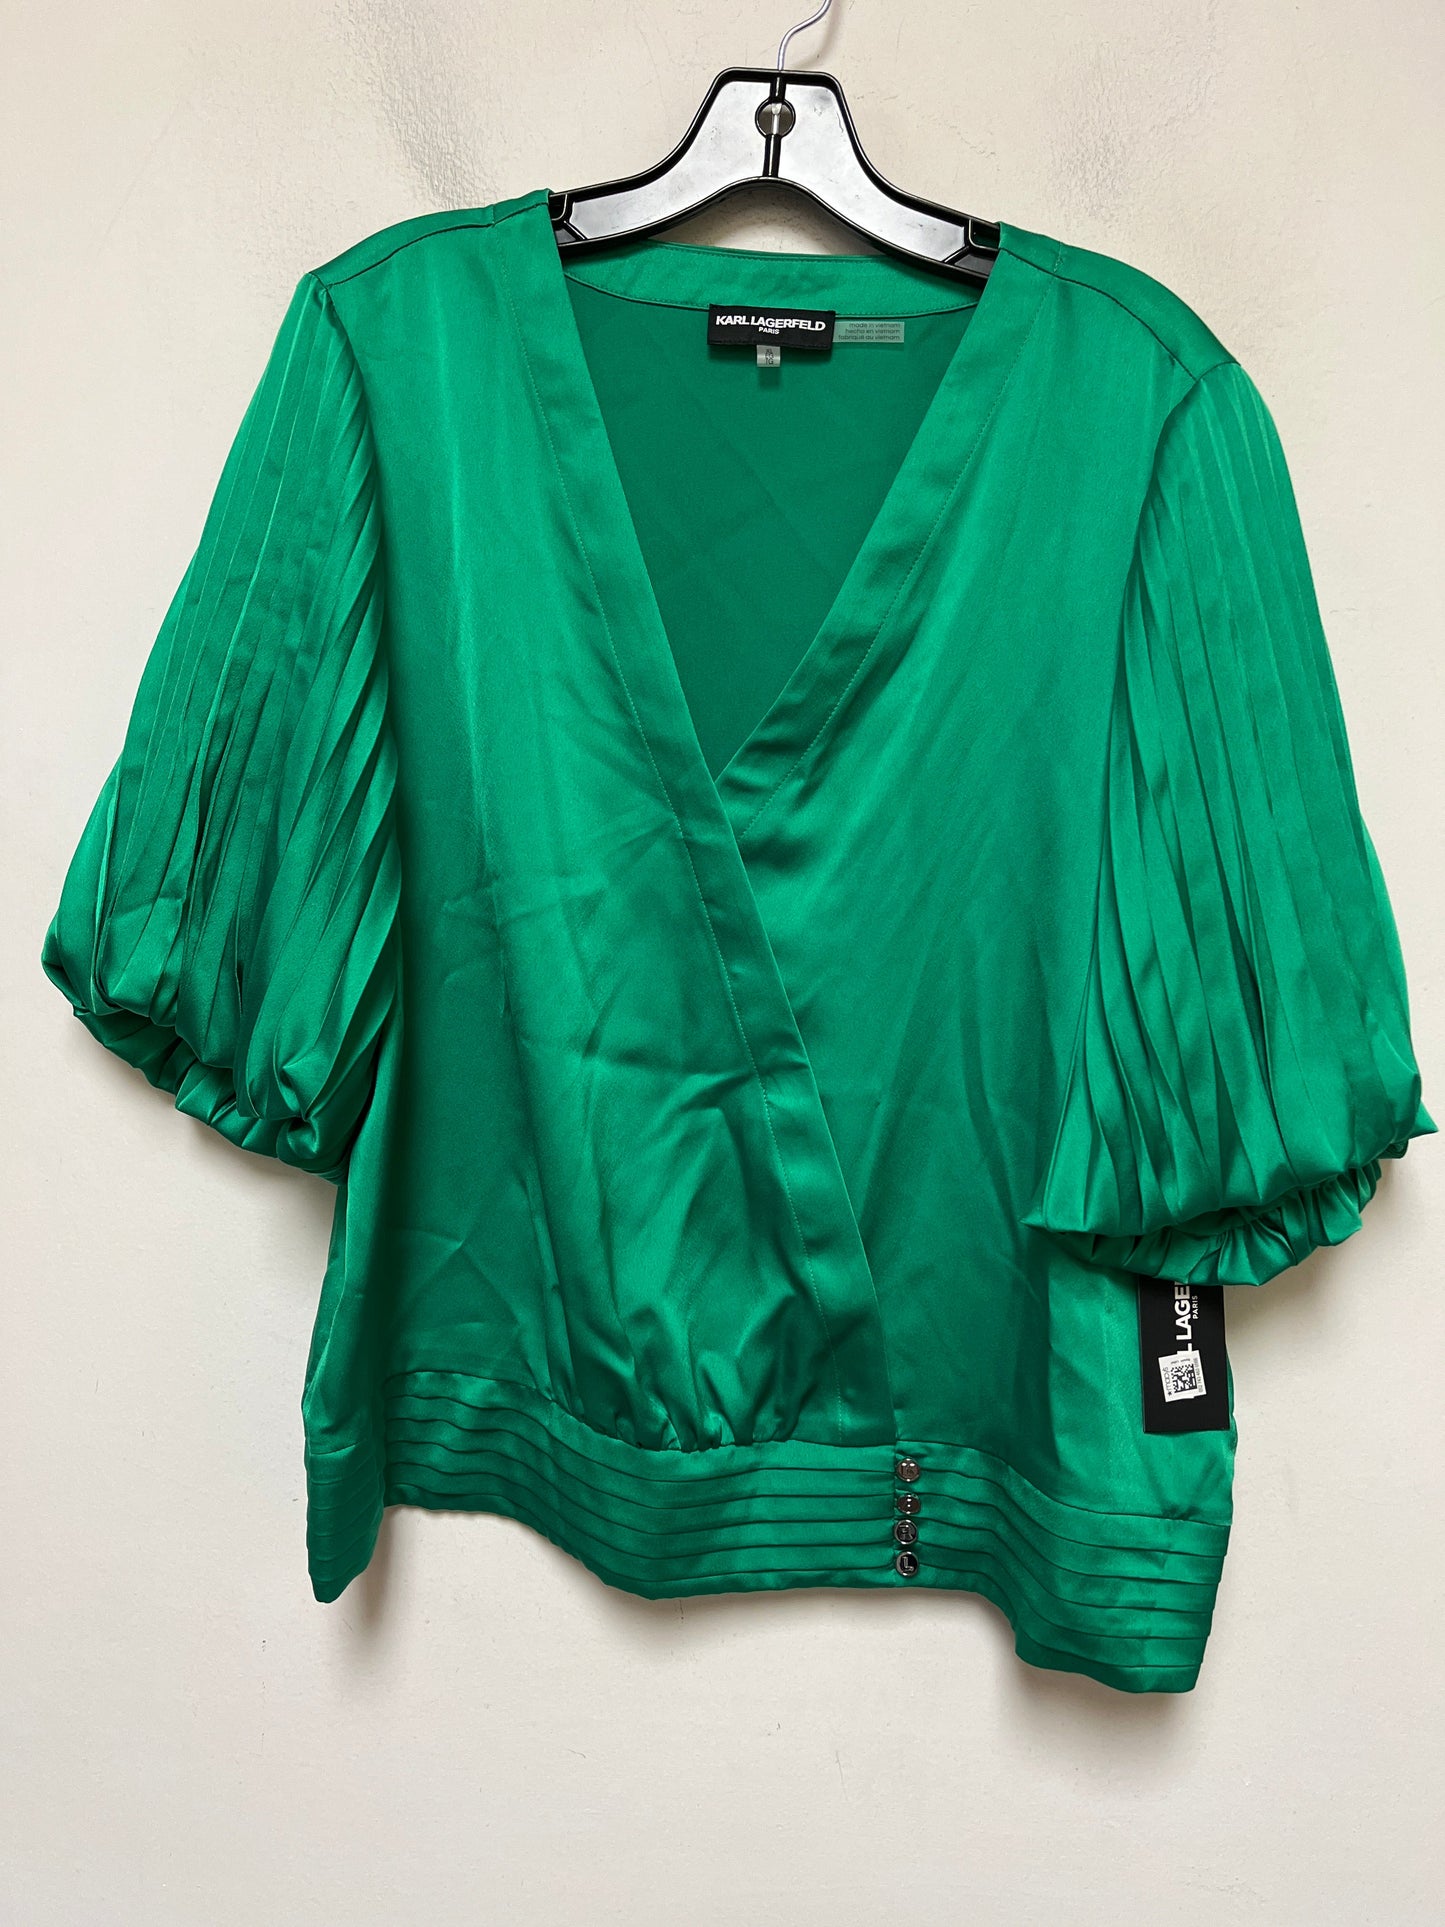 Green Top Short Sleeve Karl Lagerfeld, Size Xl